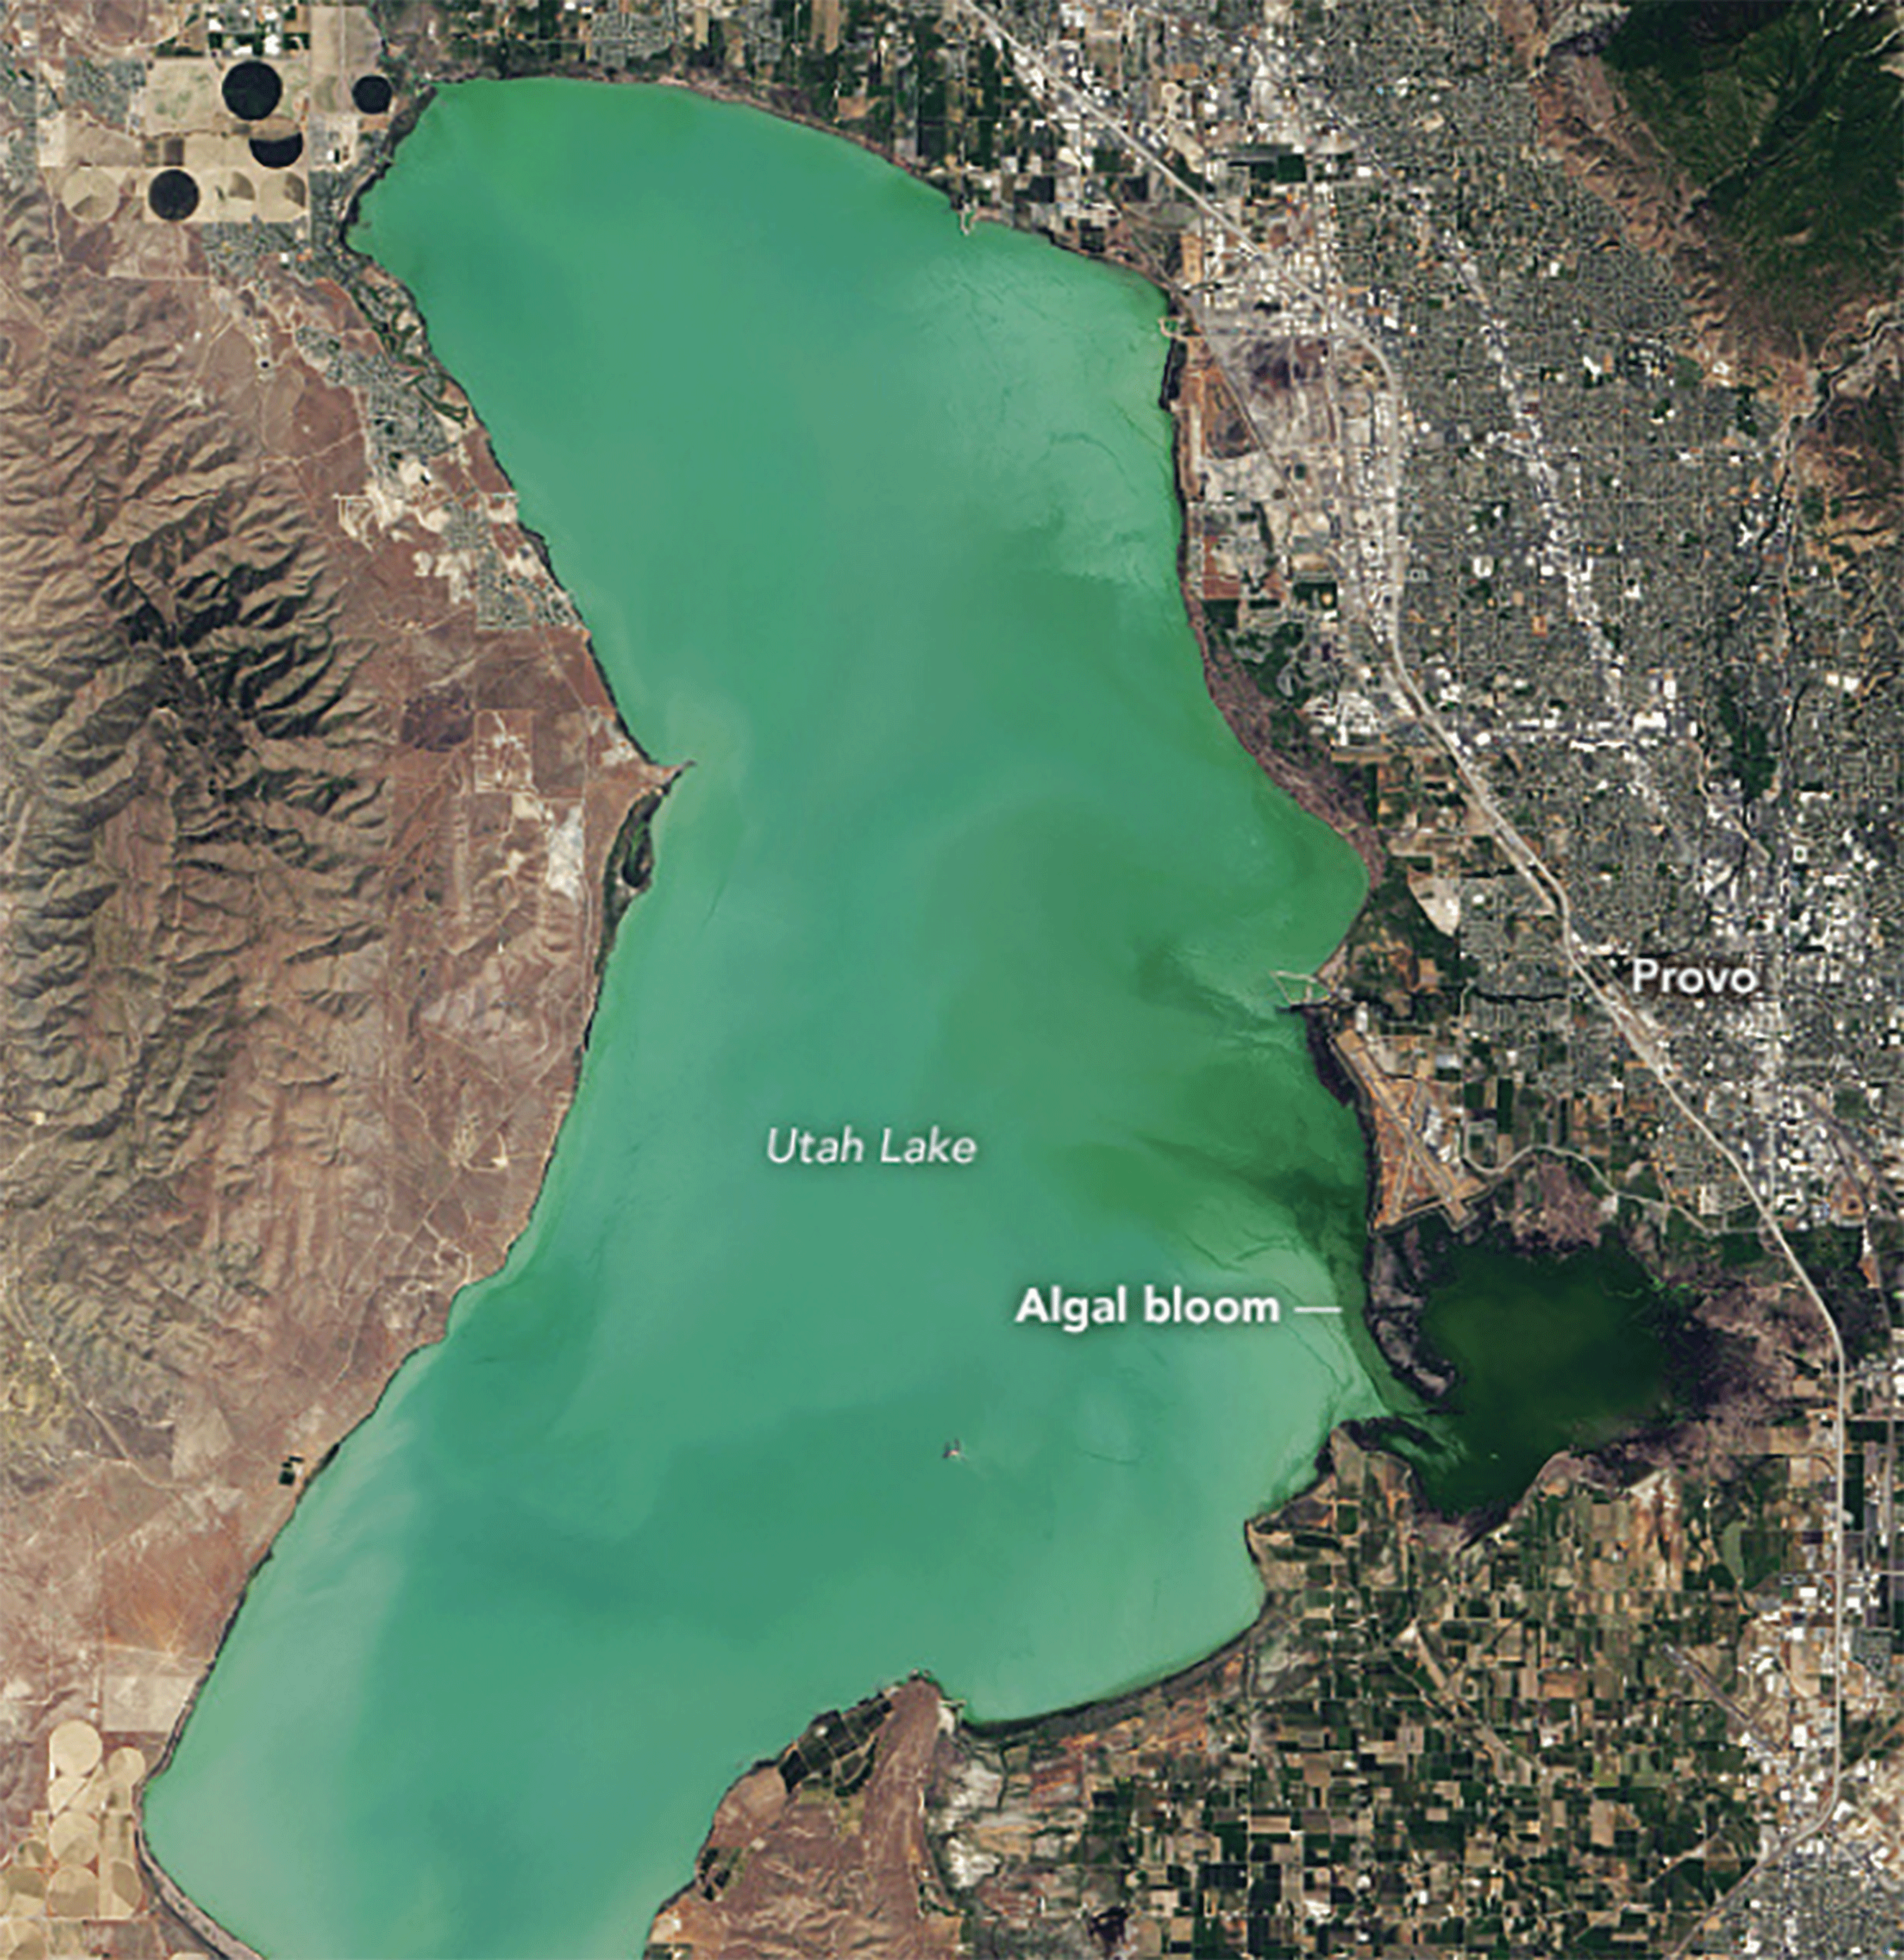 Deep green algal bloom in Utah Lake.